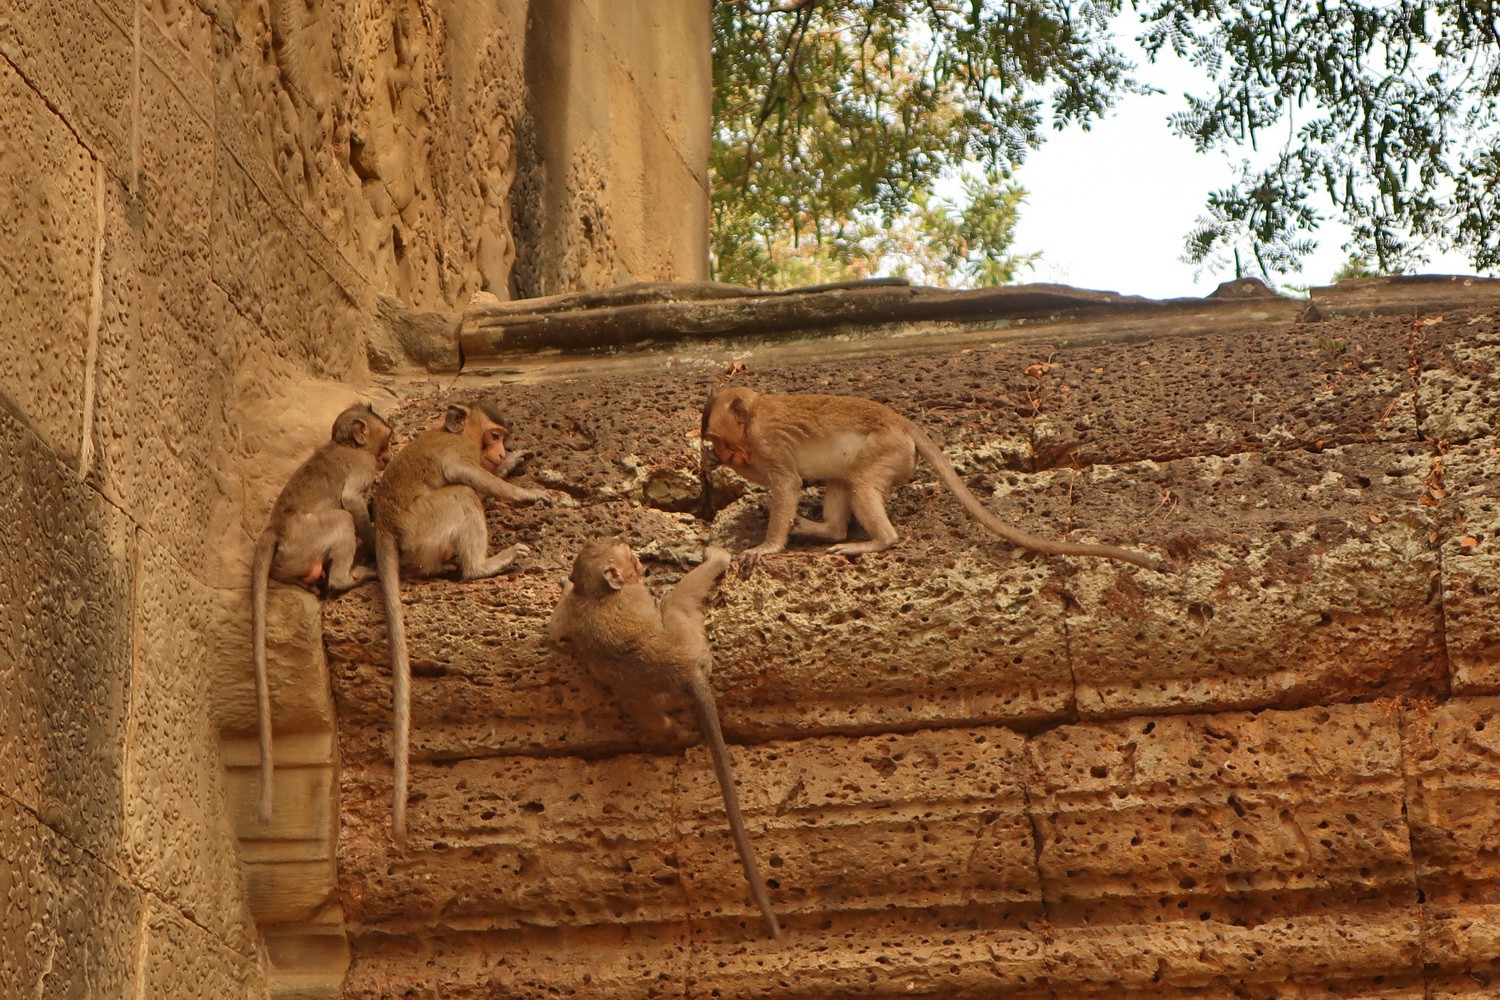 Monkeys of Angkor Wat